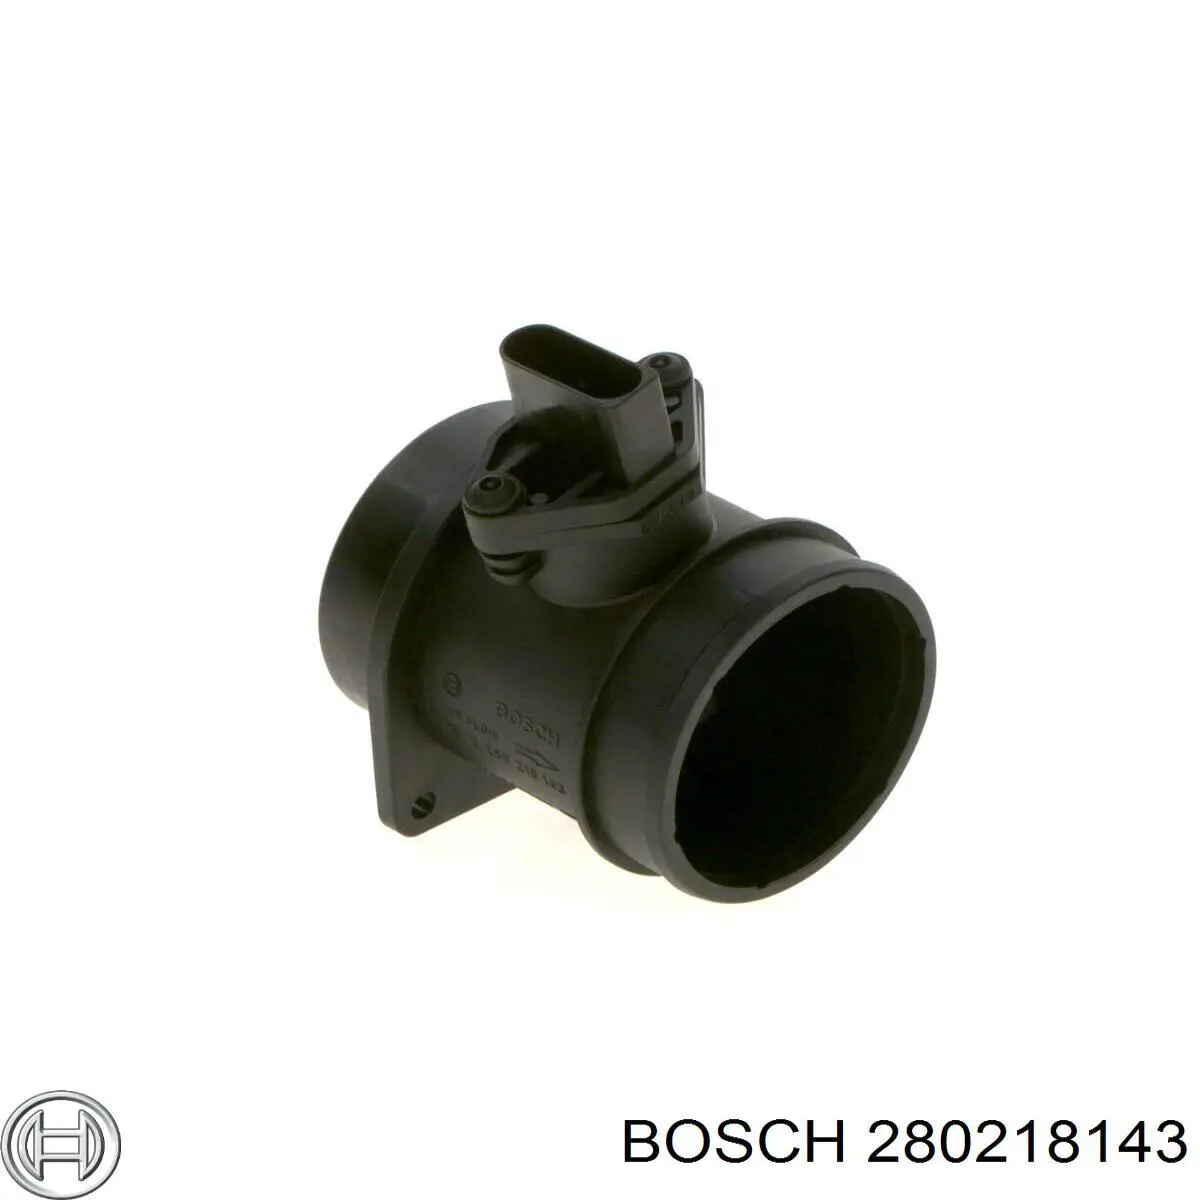 280218143 Bosch caudalímetro